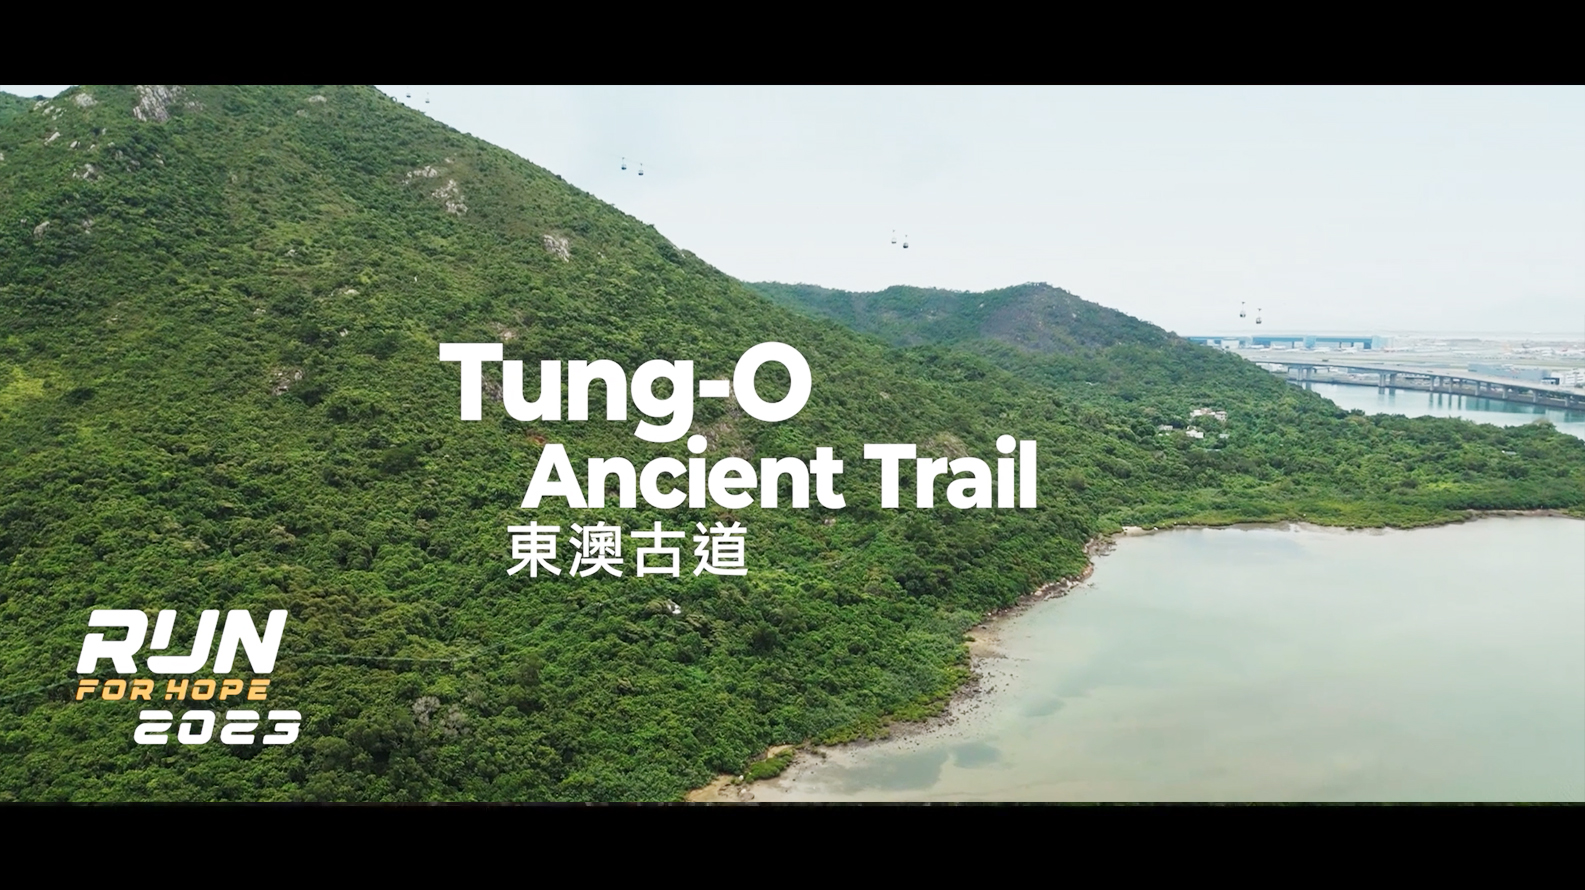 Tung-O Ancient Trail